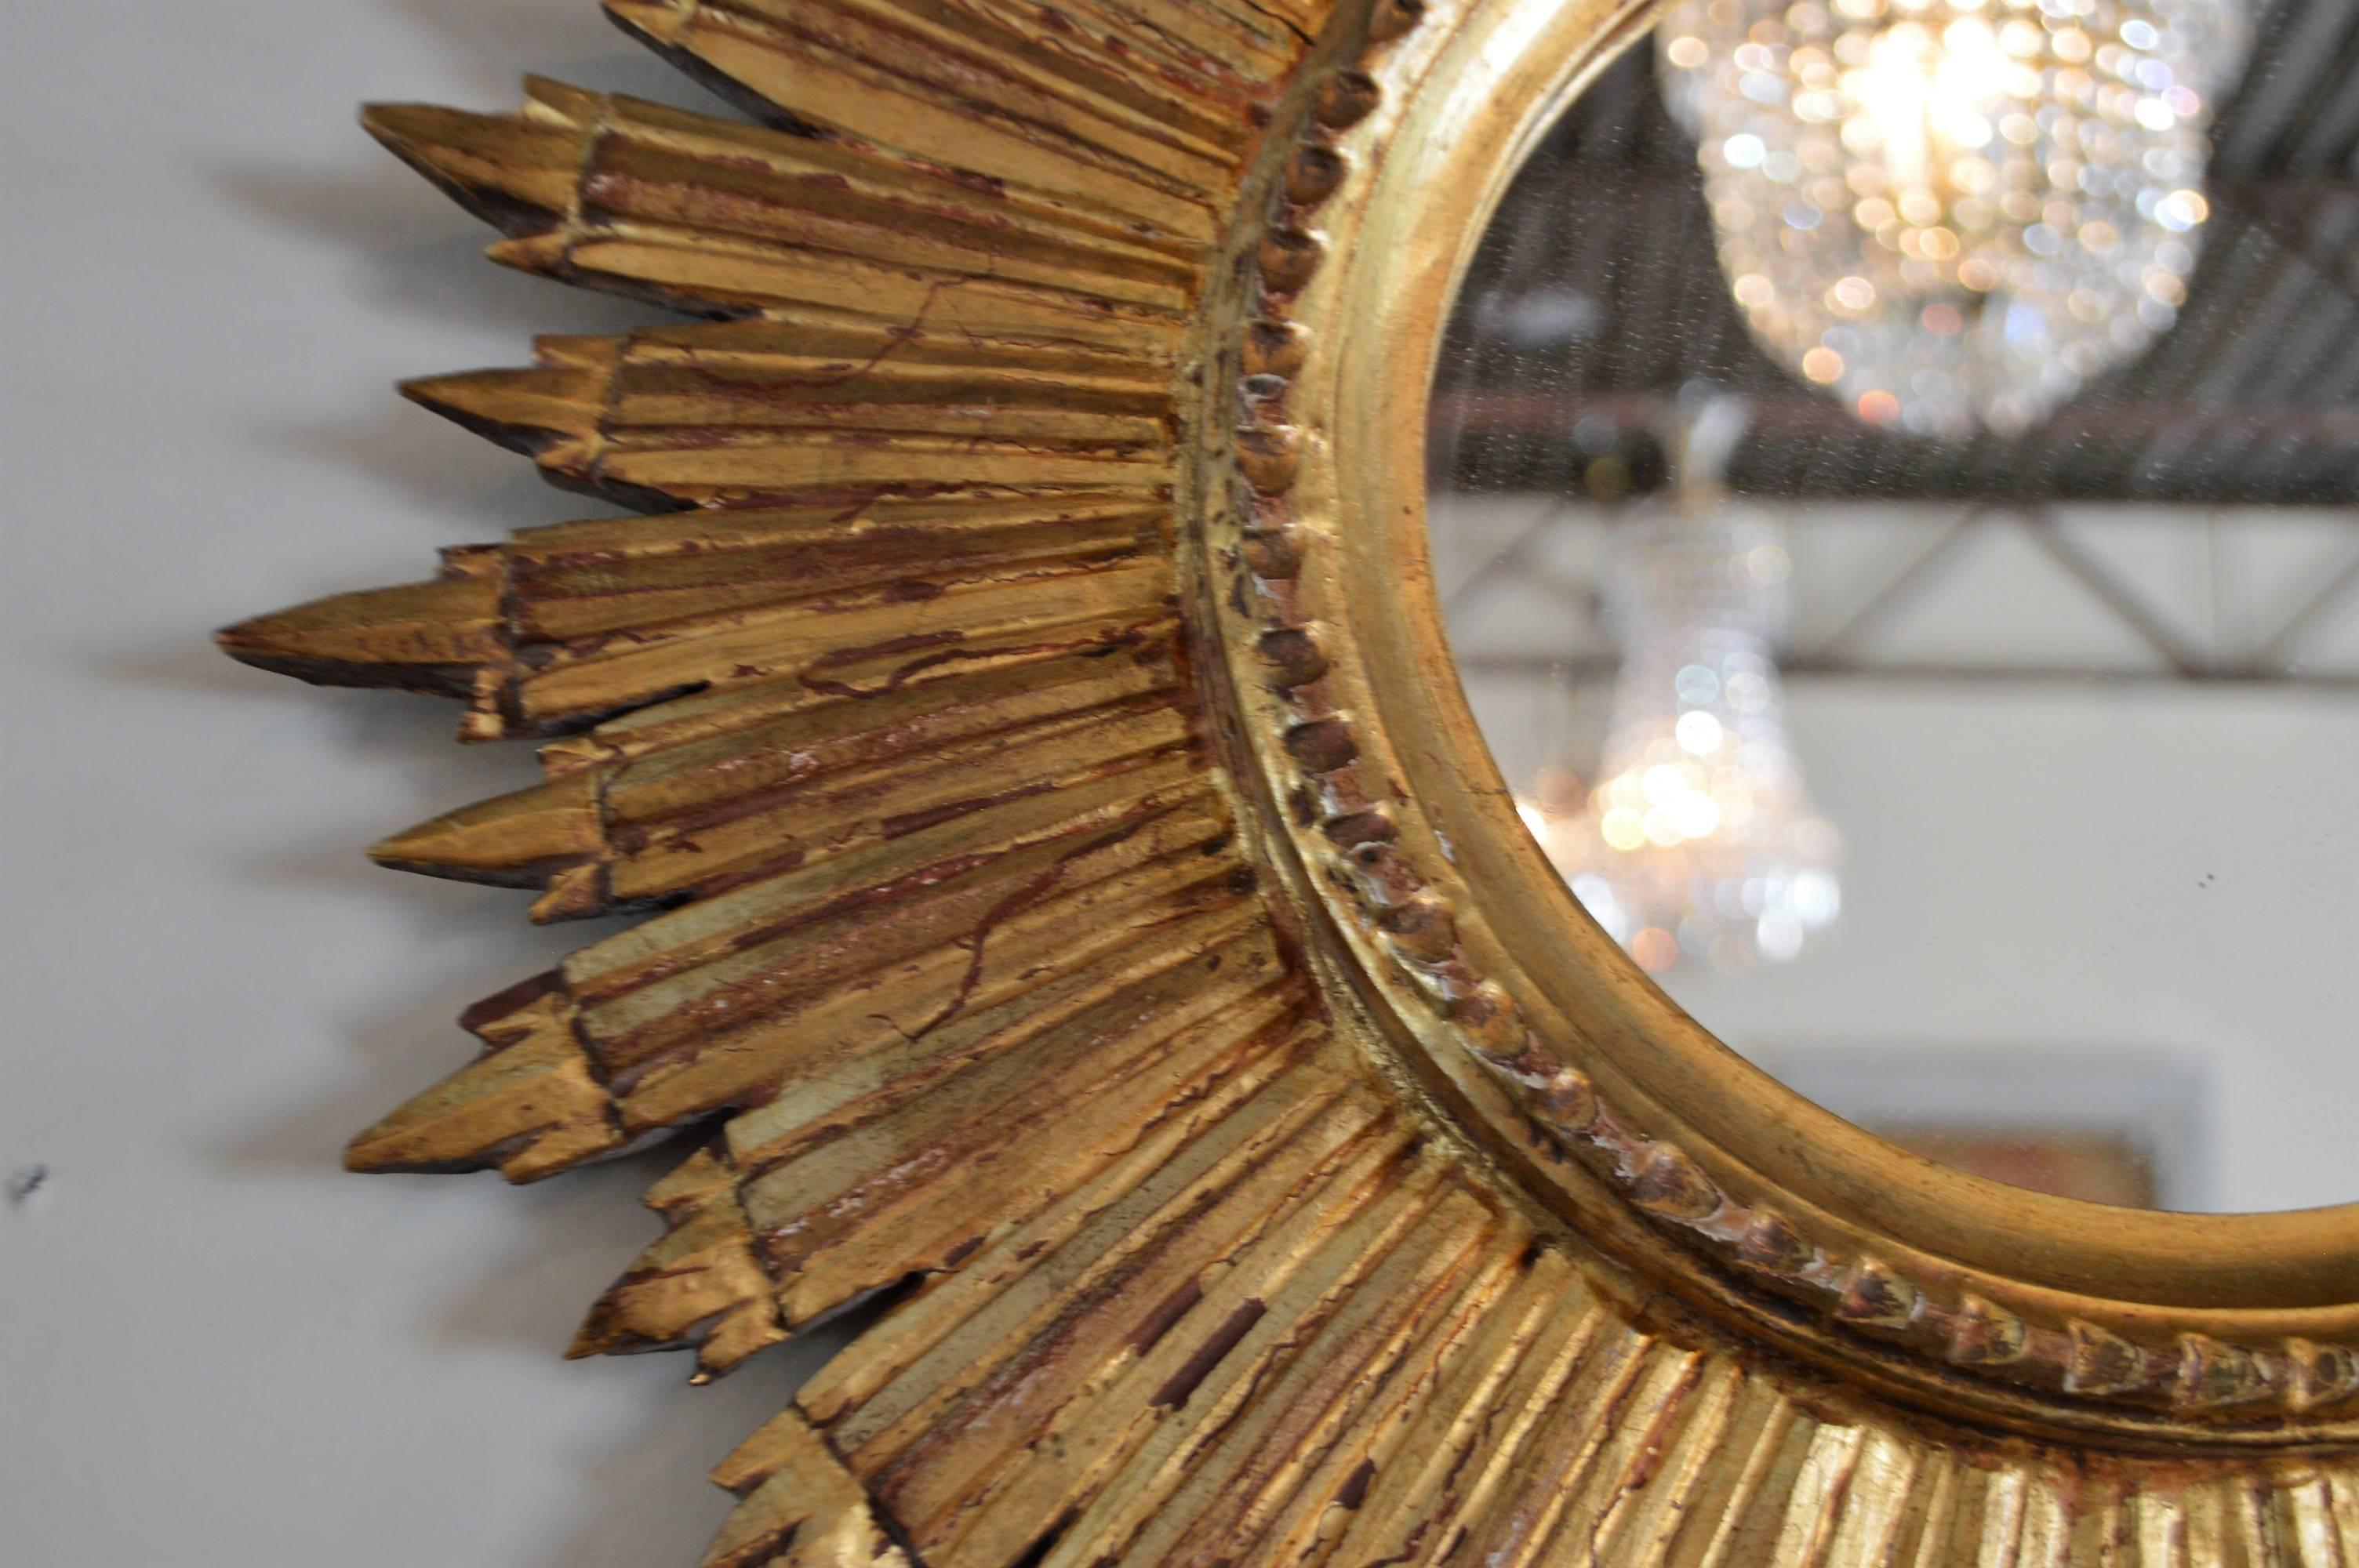 Belle Époque Antique Gilded Wooden Sunburst Mirror from France, Handcrafted